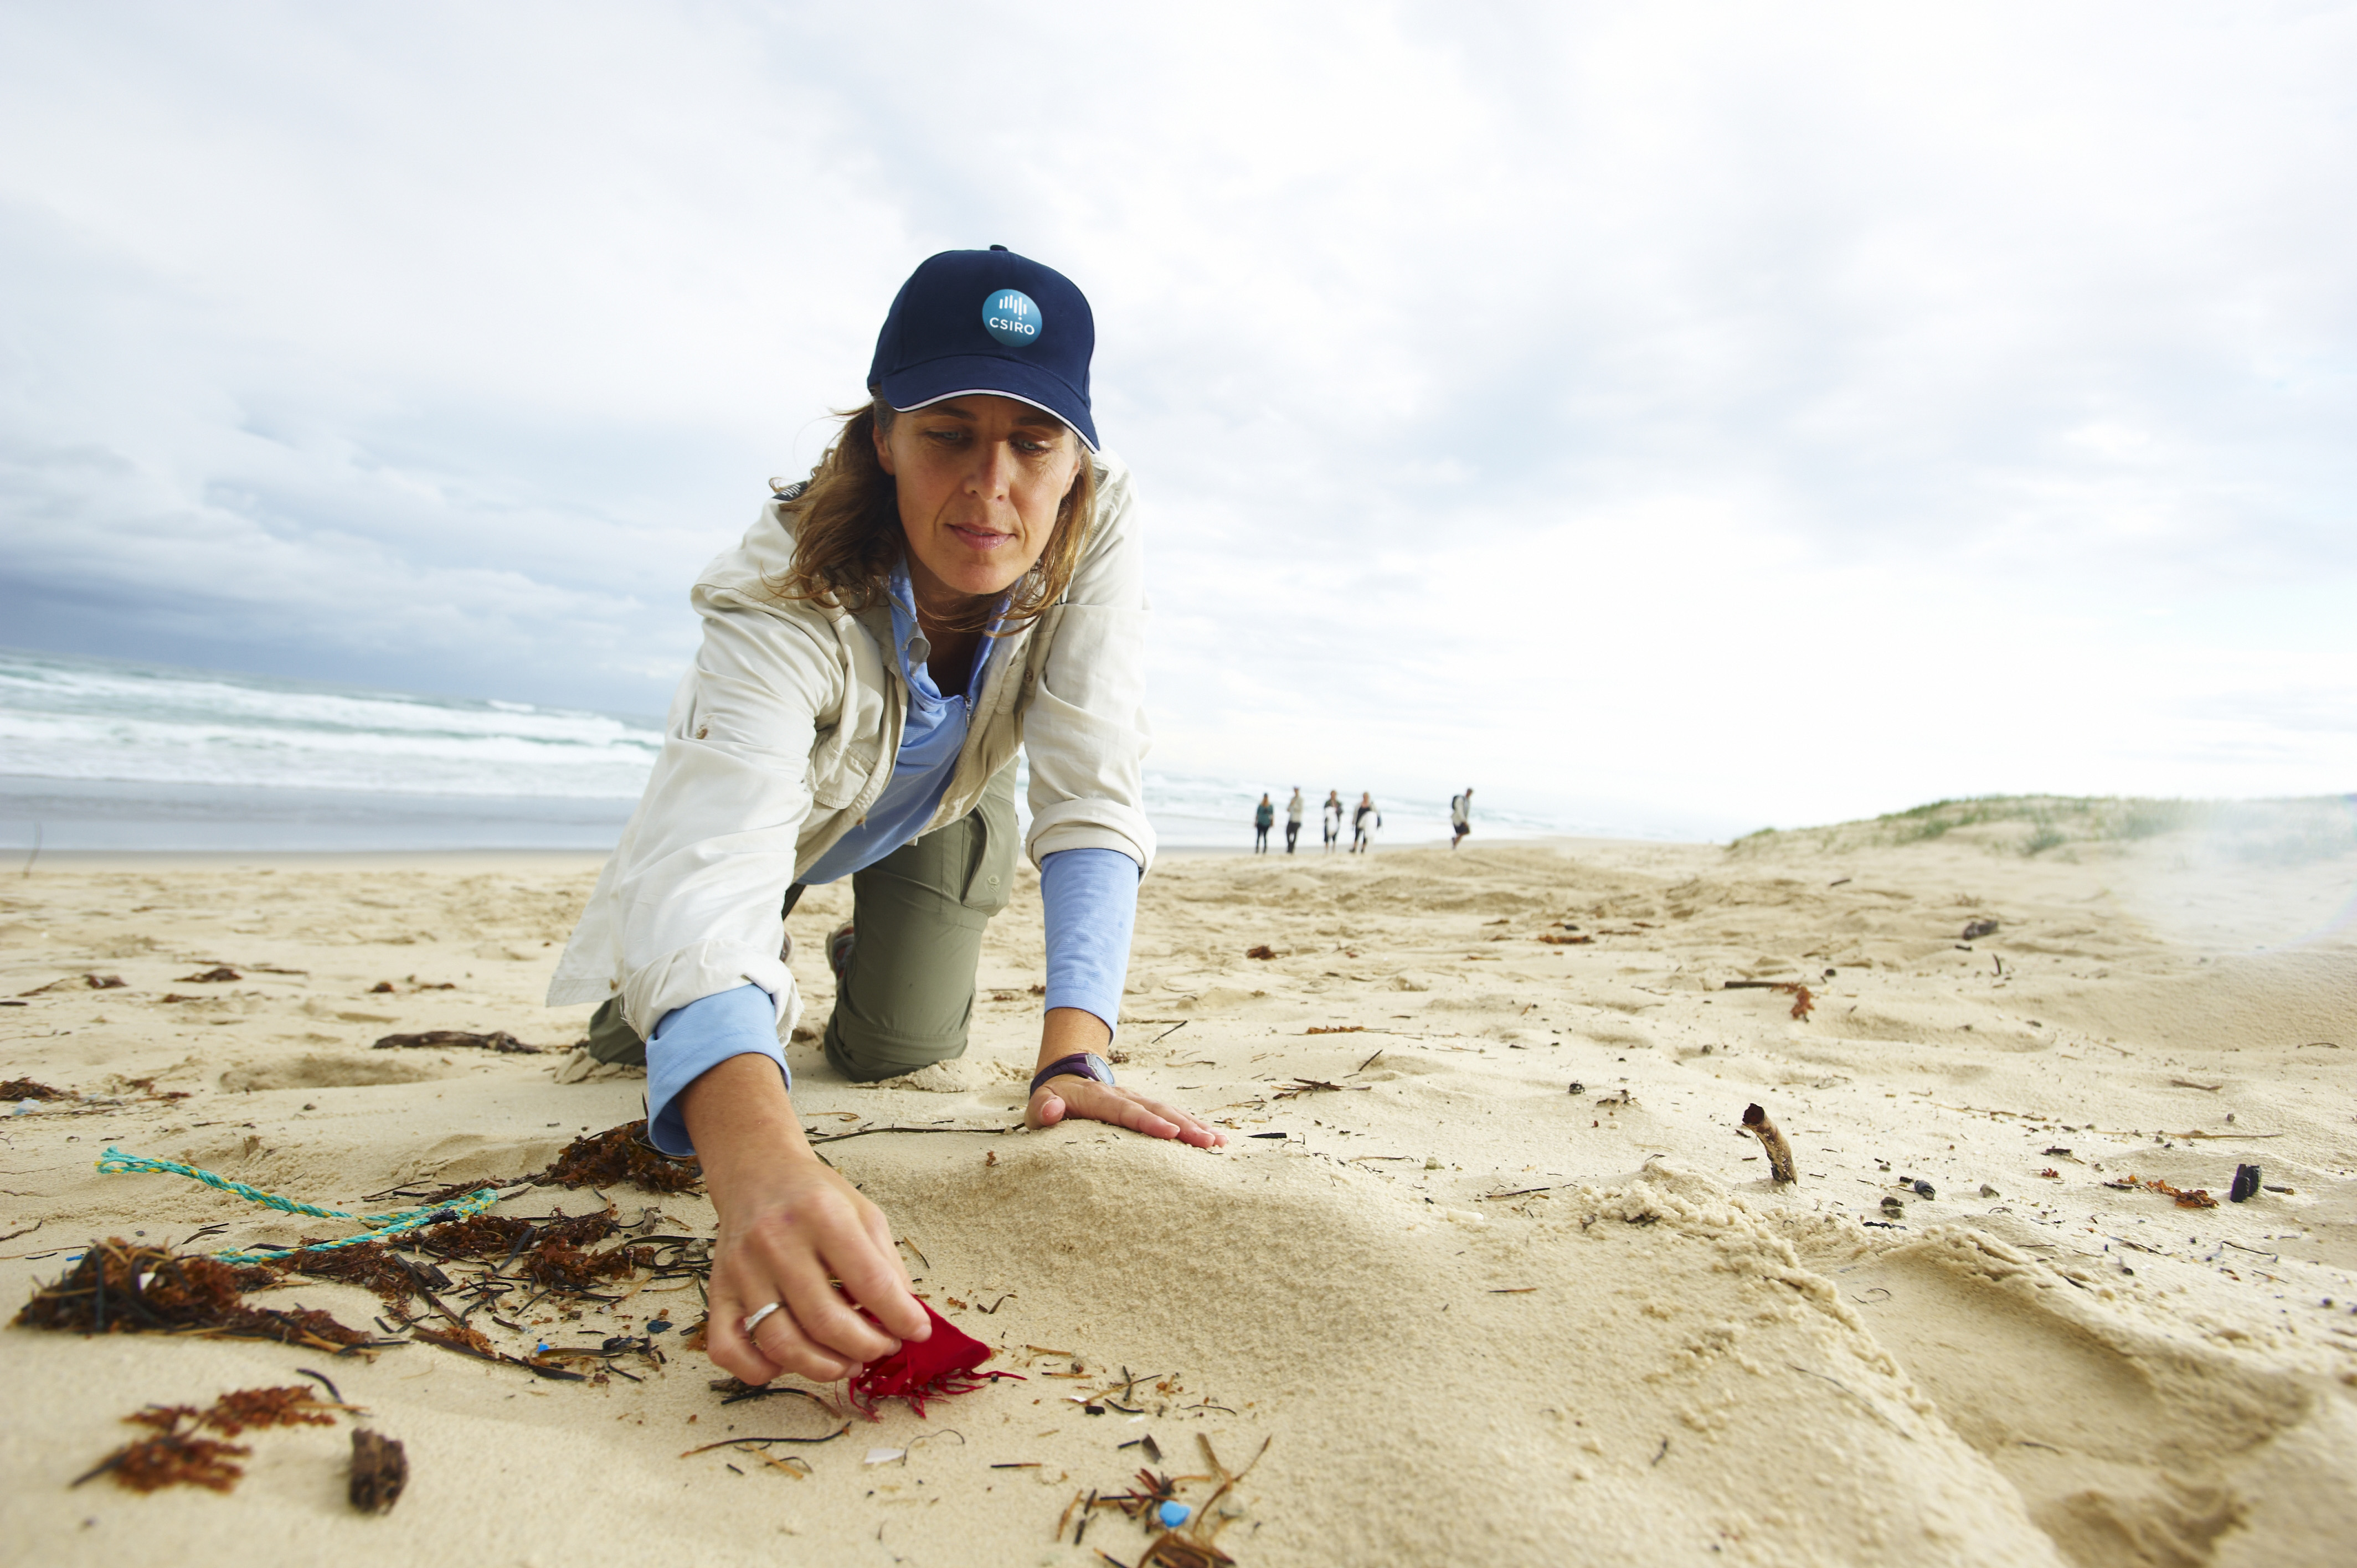 Researcher Dr Britta Denise Hardesty kneeling on a beach wearing a CSIRO cap, picking up a piece of a red balloon.